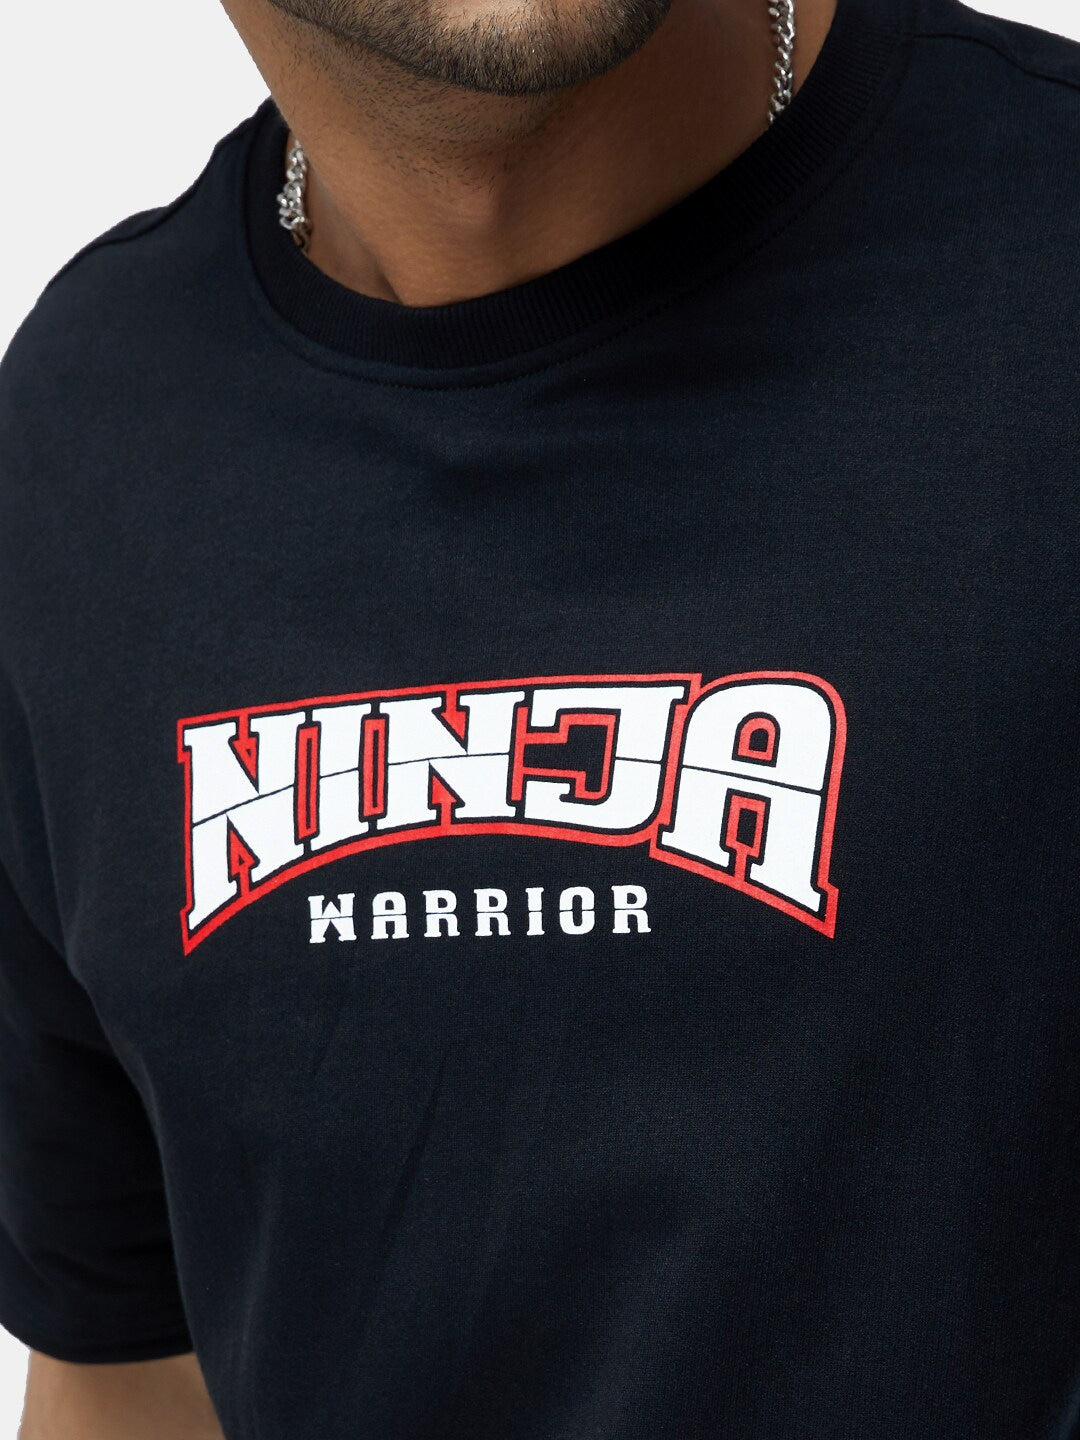 Men's Ninja Oversized Graphic Tee